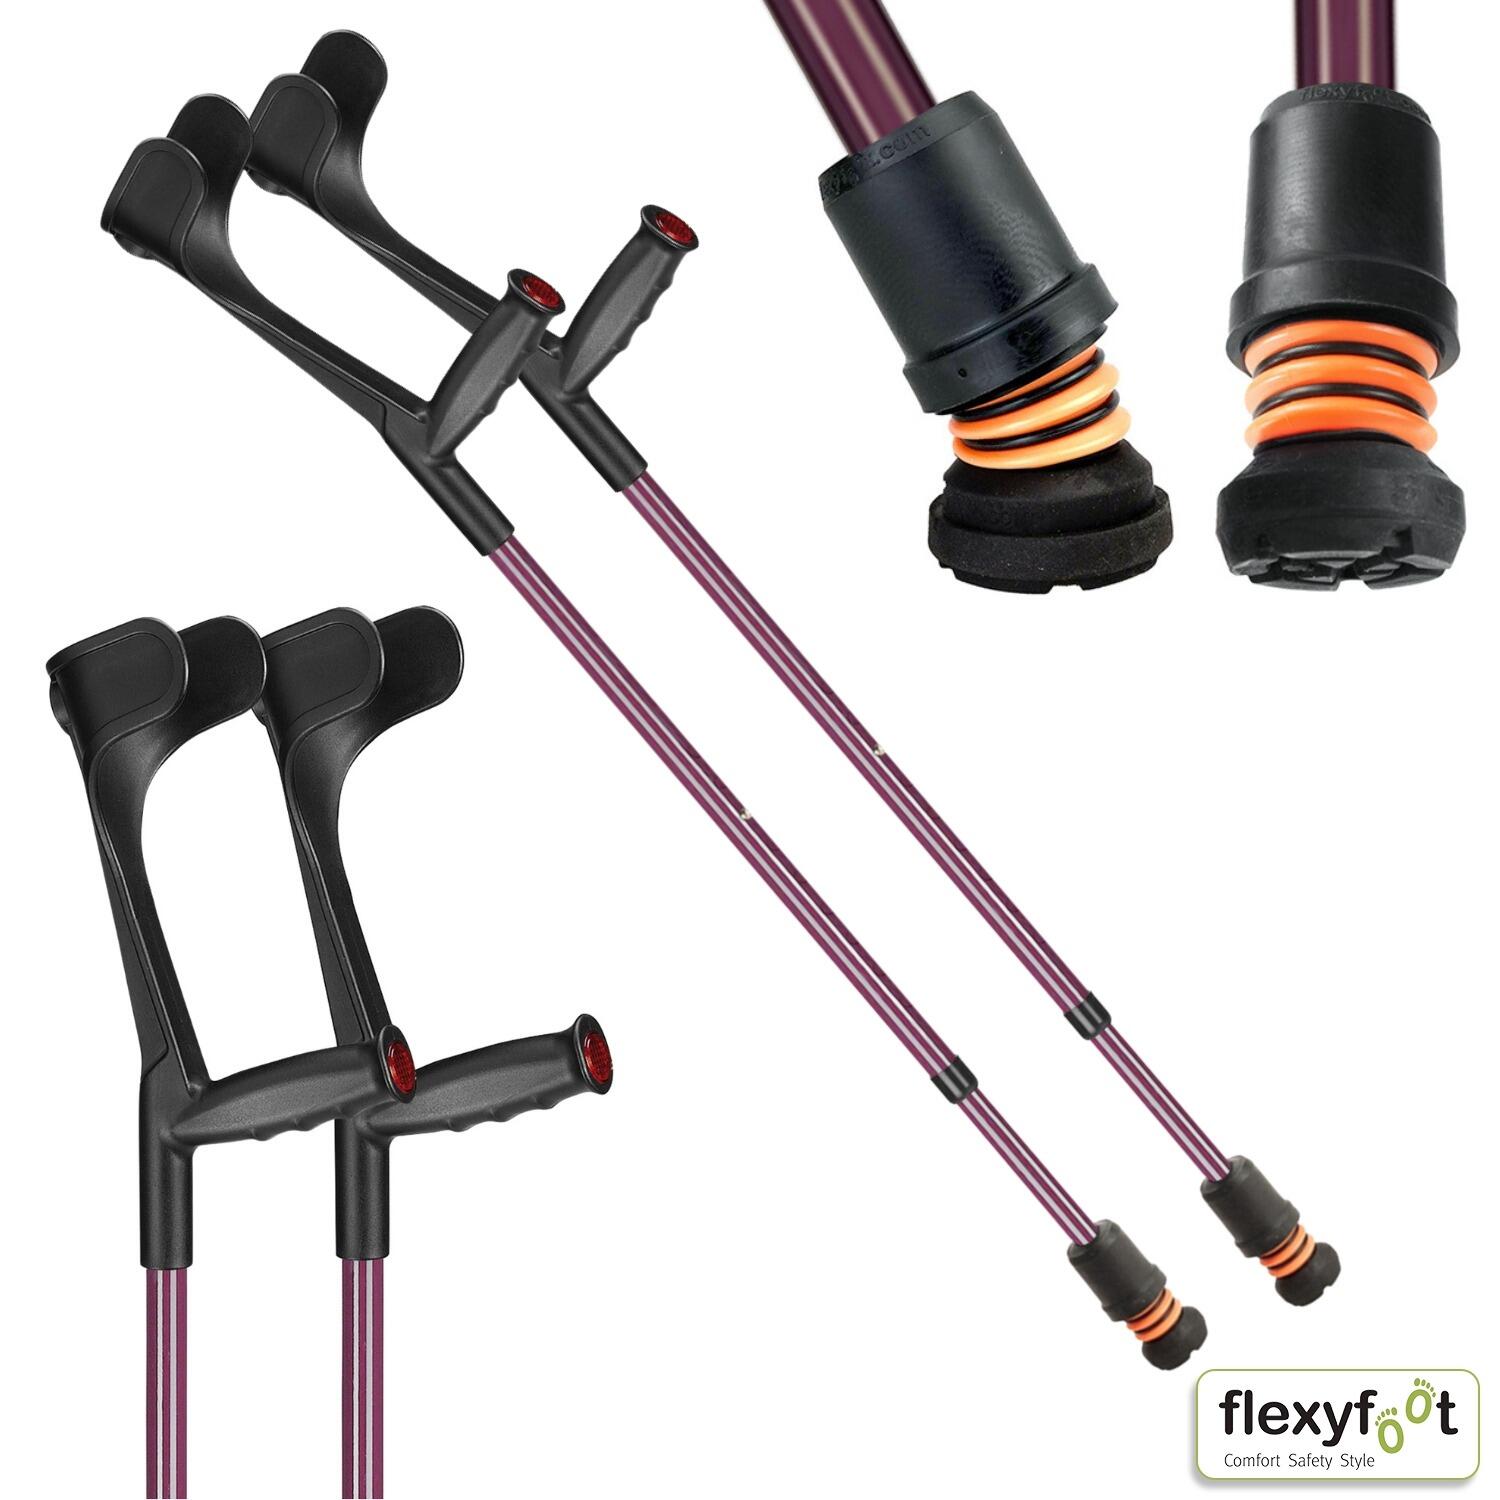 A pair of blackberry Flexyfoot Soft Grip Open Cuff Crutches